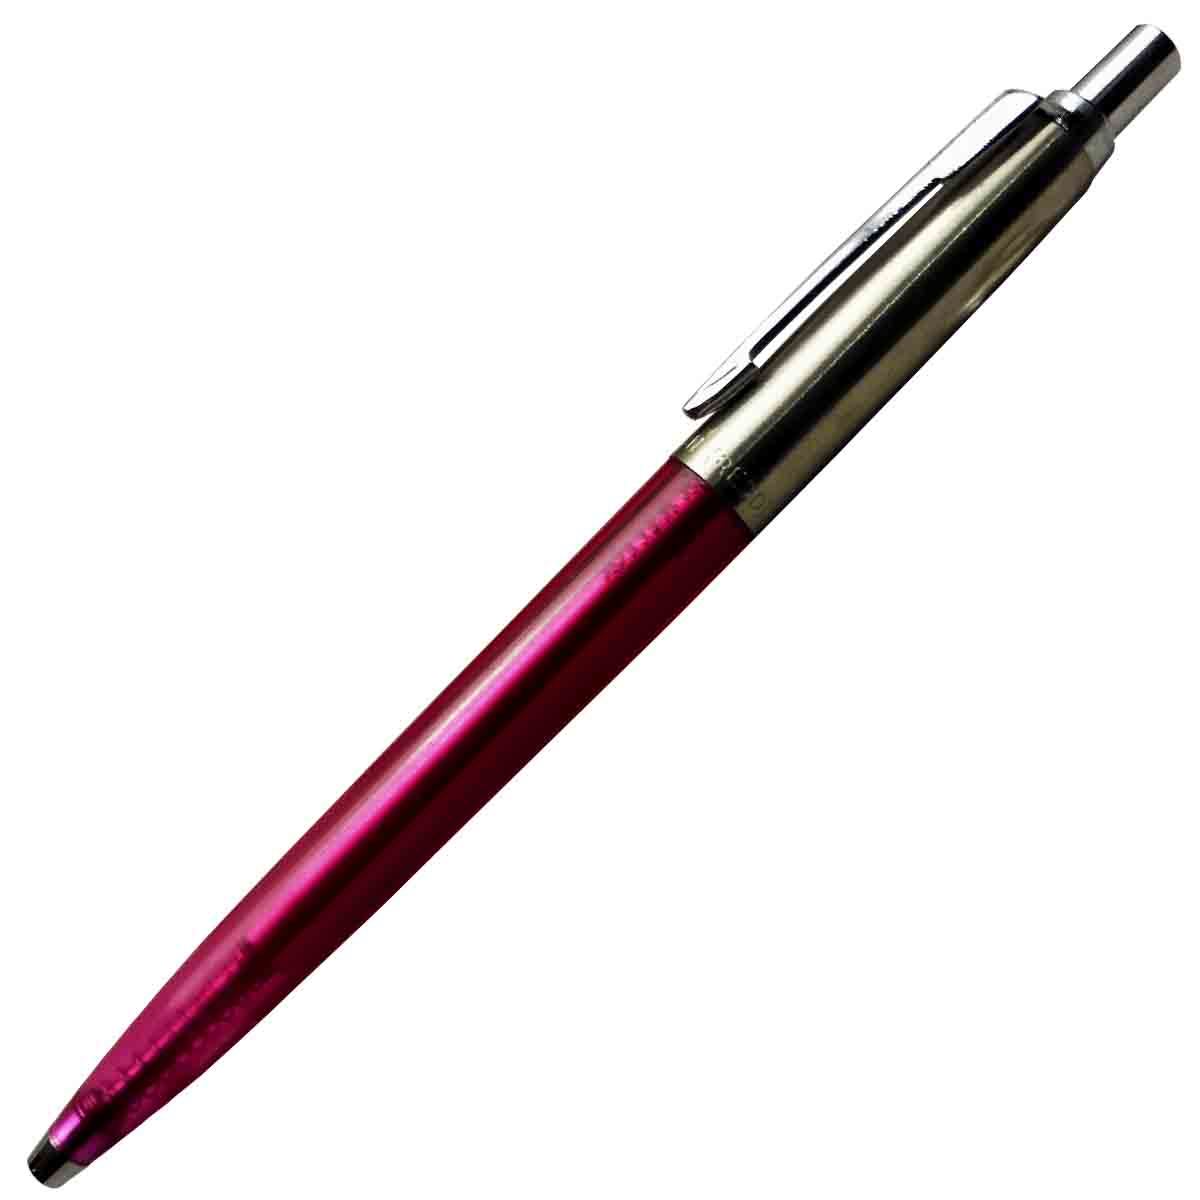 Wilson Transparent Pink Color Body With Medium Tip Retractable Ball Pen SKU 18991